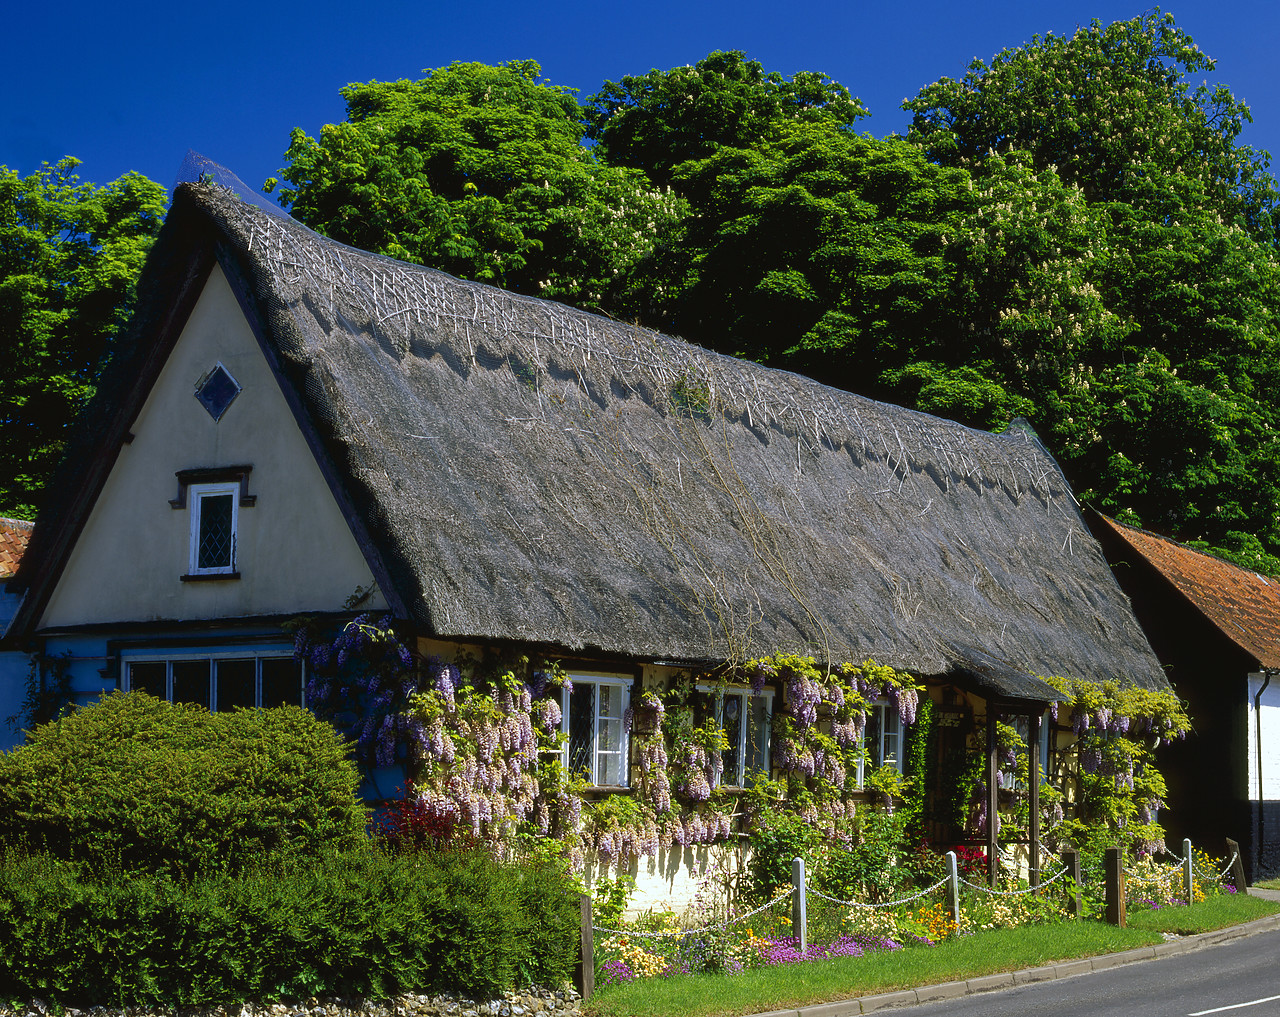 #010622-3 - Old Schoolhouse Cottage in Spring, Saxlingham, Norfolk, England